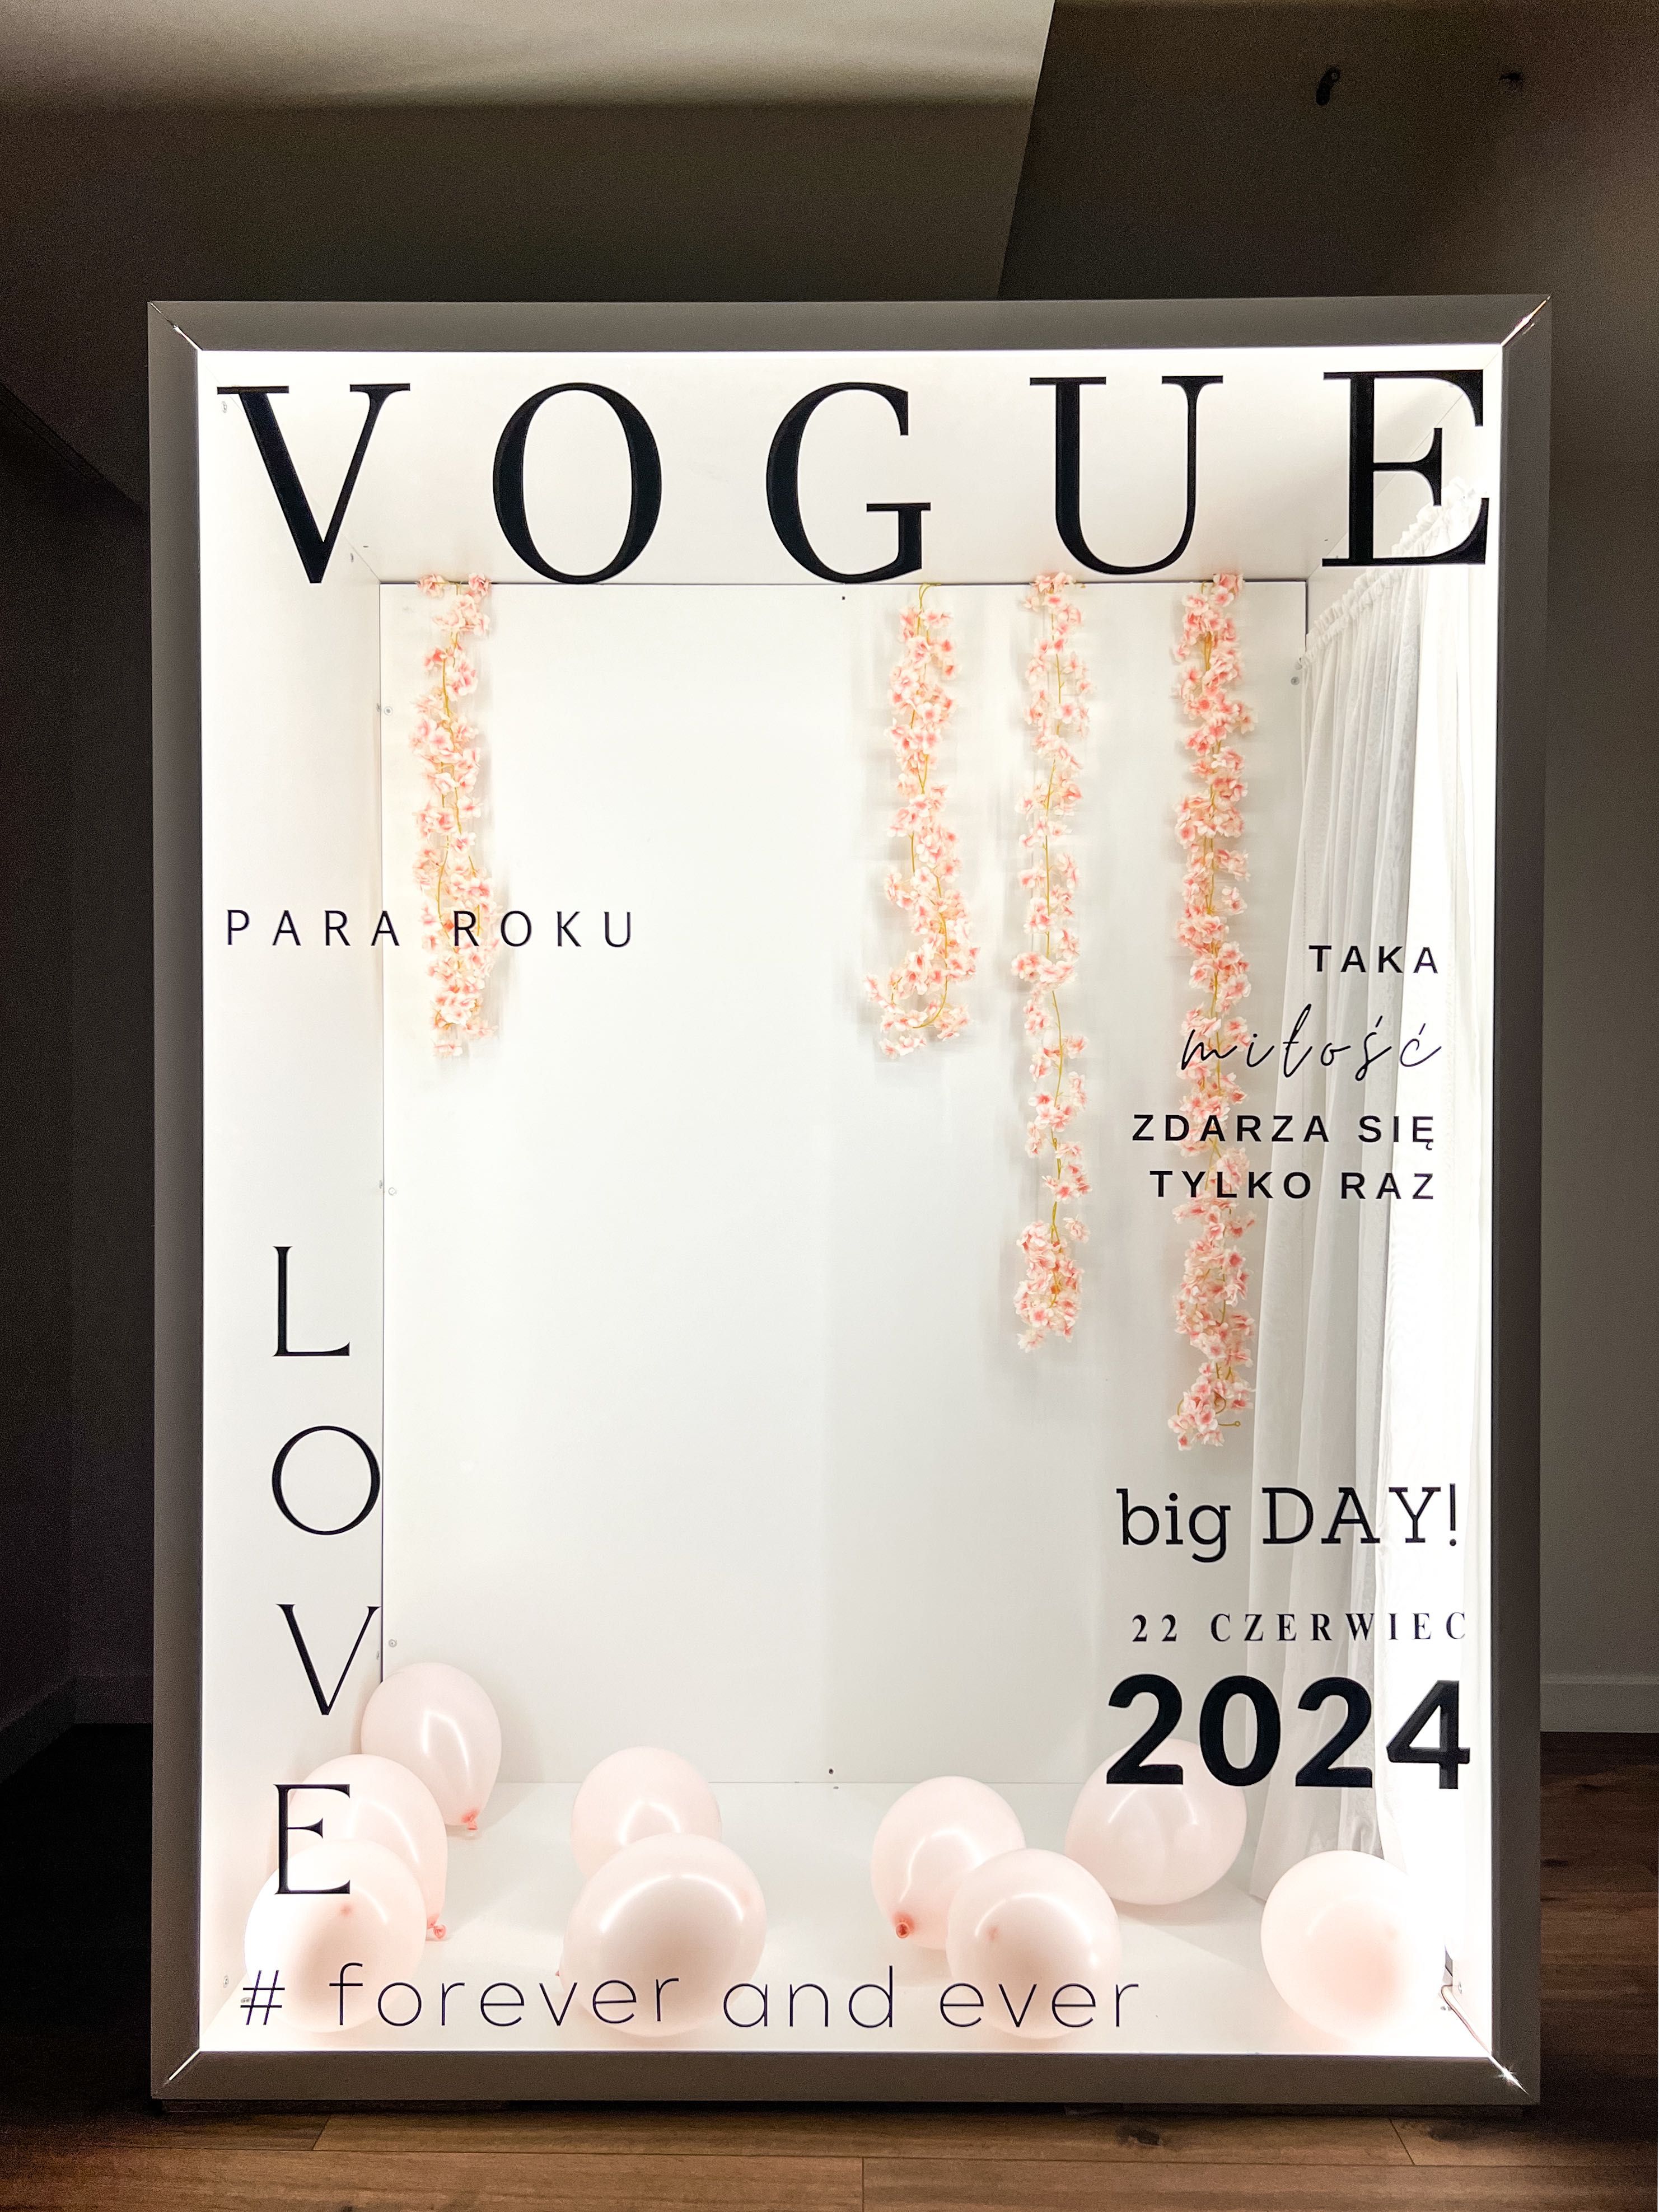 Photobox Magazine Vogue HIT 2024 atrakcja weselna Cieszyn Bielsko